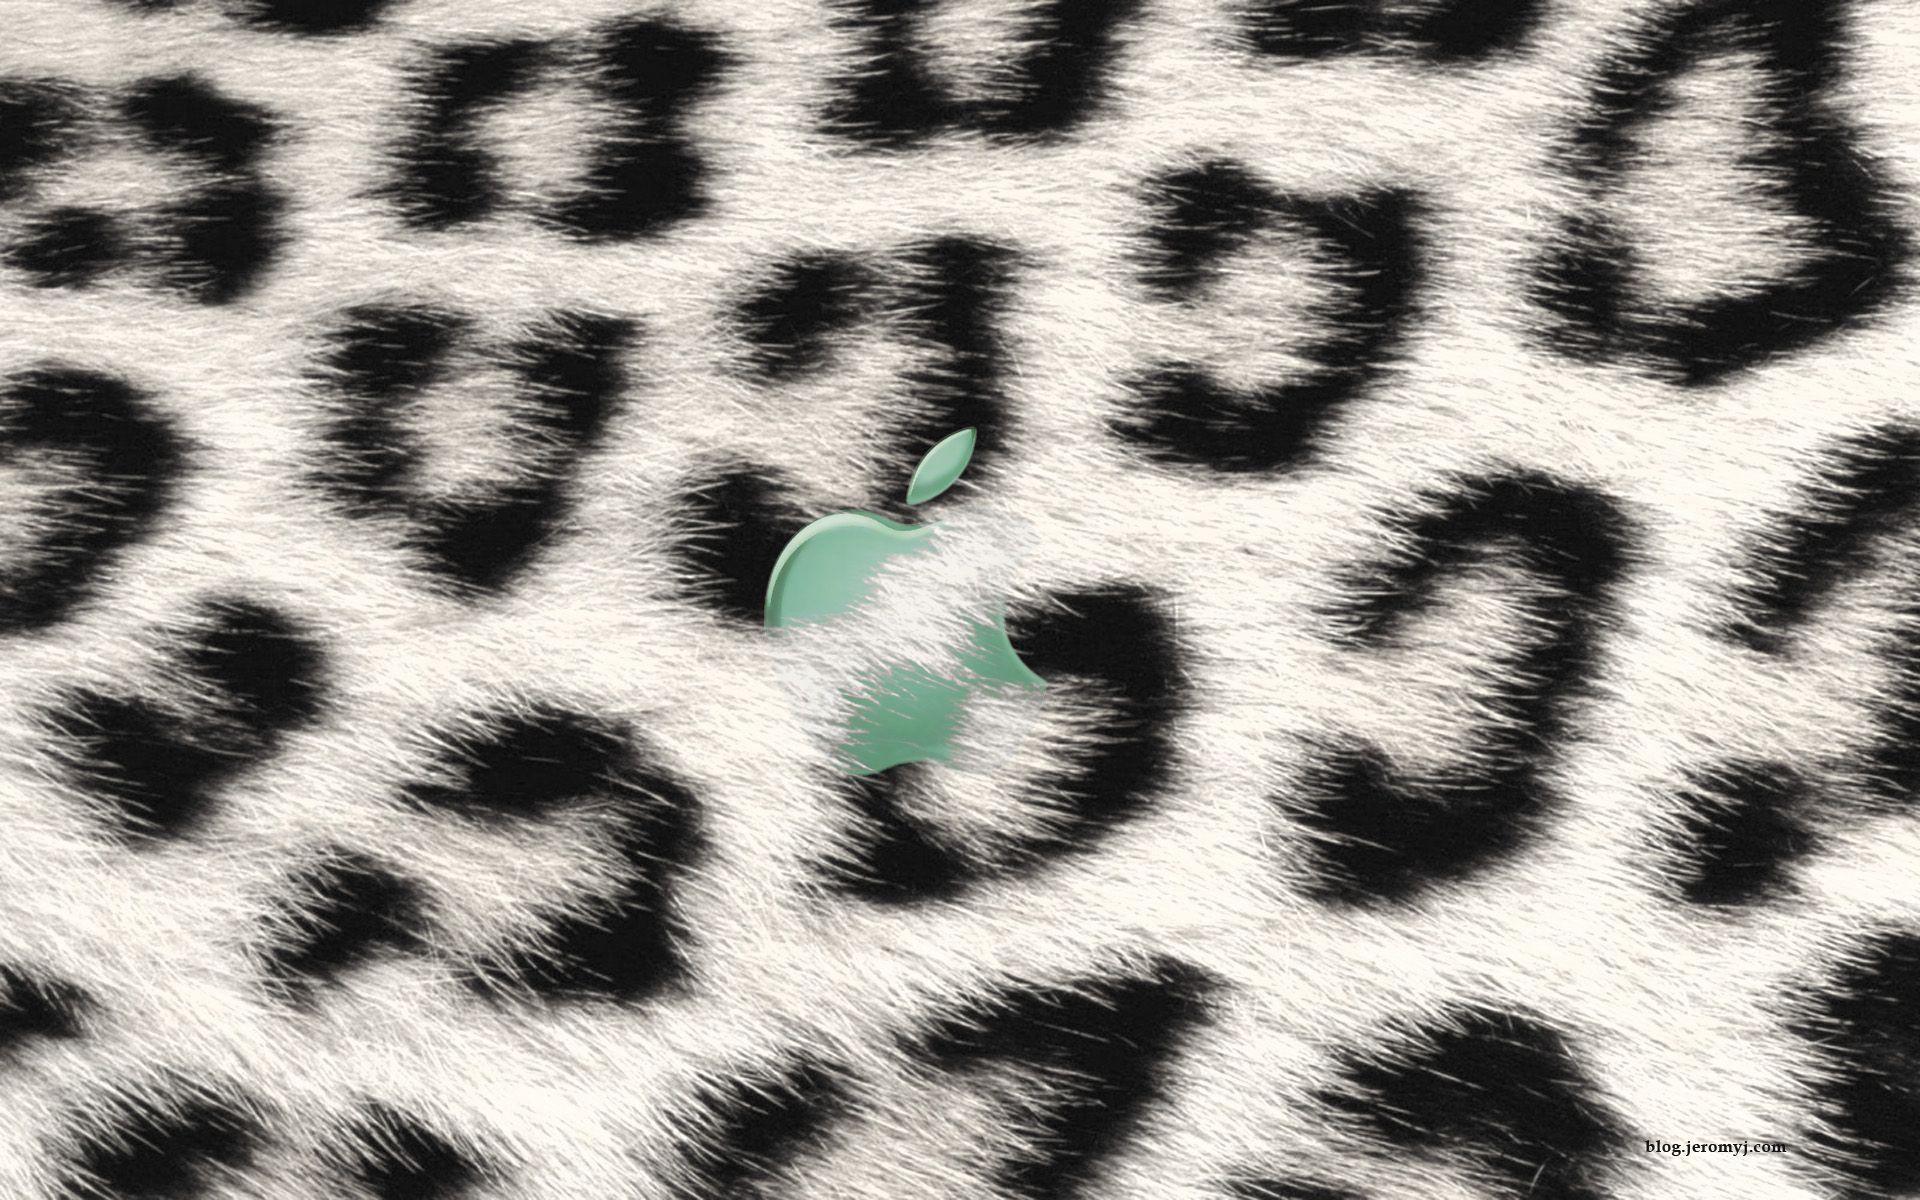 apple leopard backgrounds